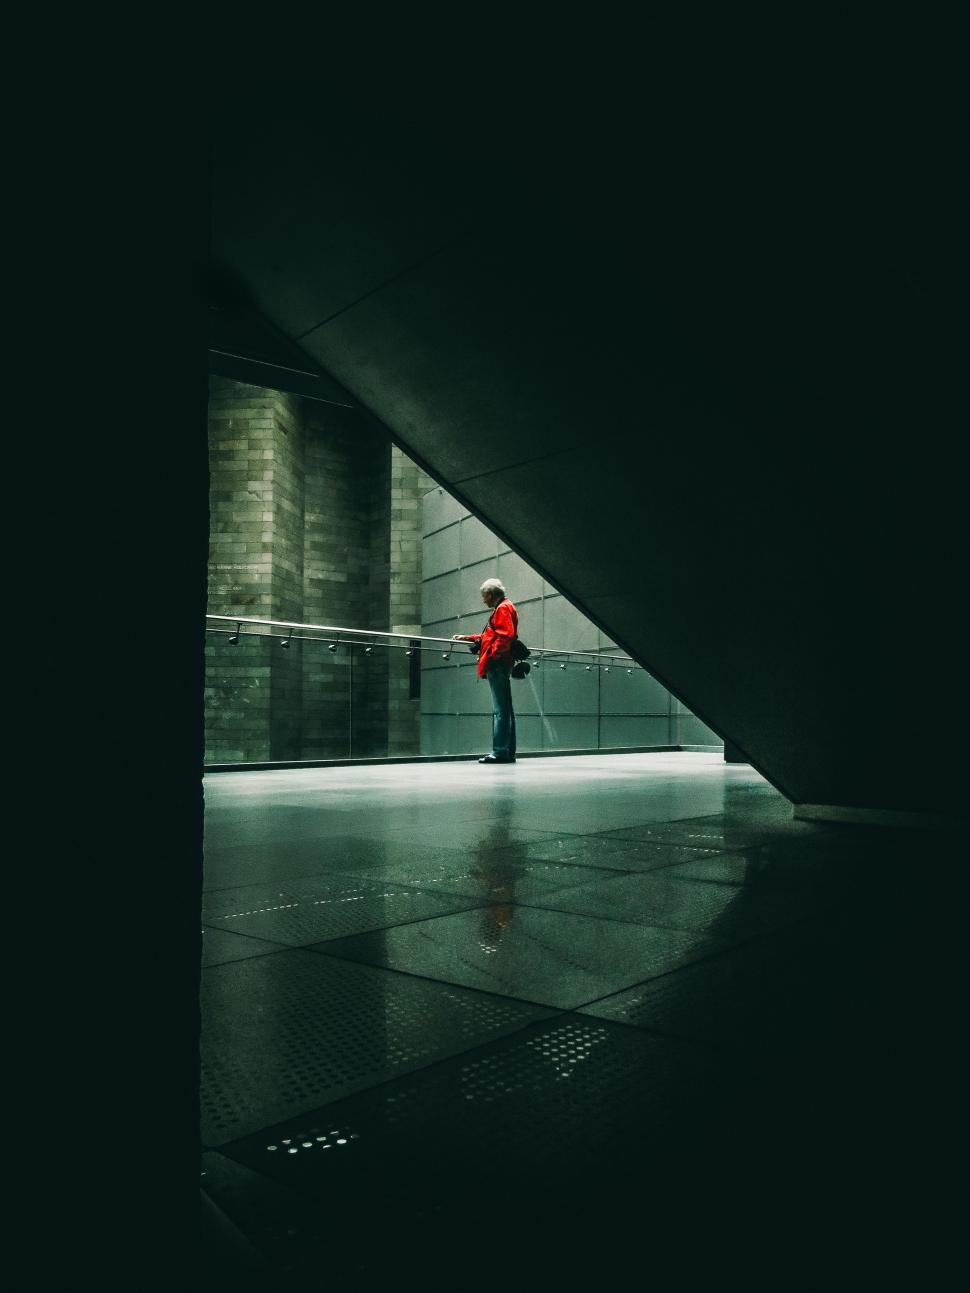 Free Image of Man in Red Jacket Standing in Dark Room 